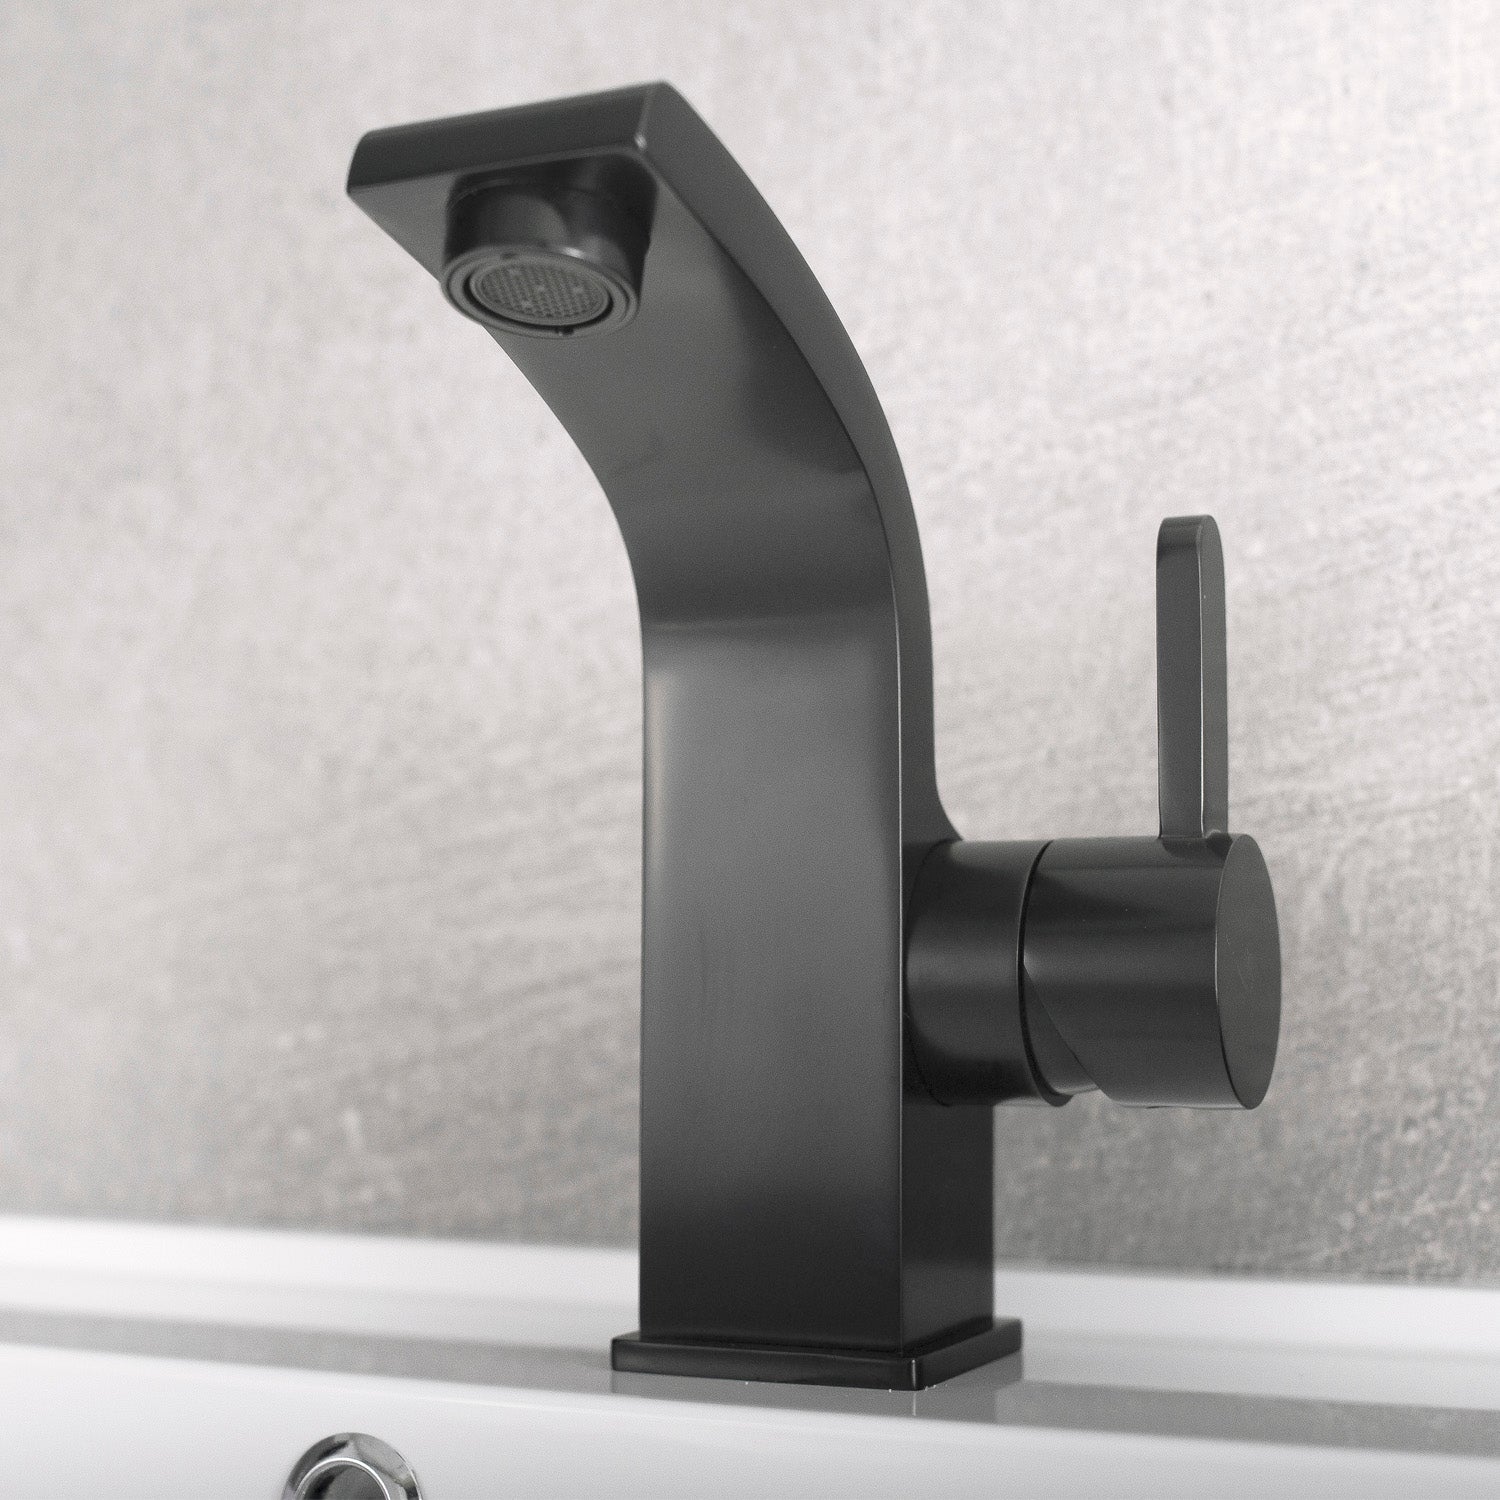 DAX Single Handle Bathroom Faucet, Brass Body, Matte Black Finish, 3-15/16 x 5-15/16 Inches (DAX-8260-BL)